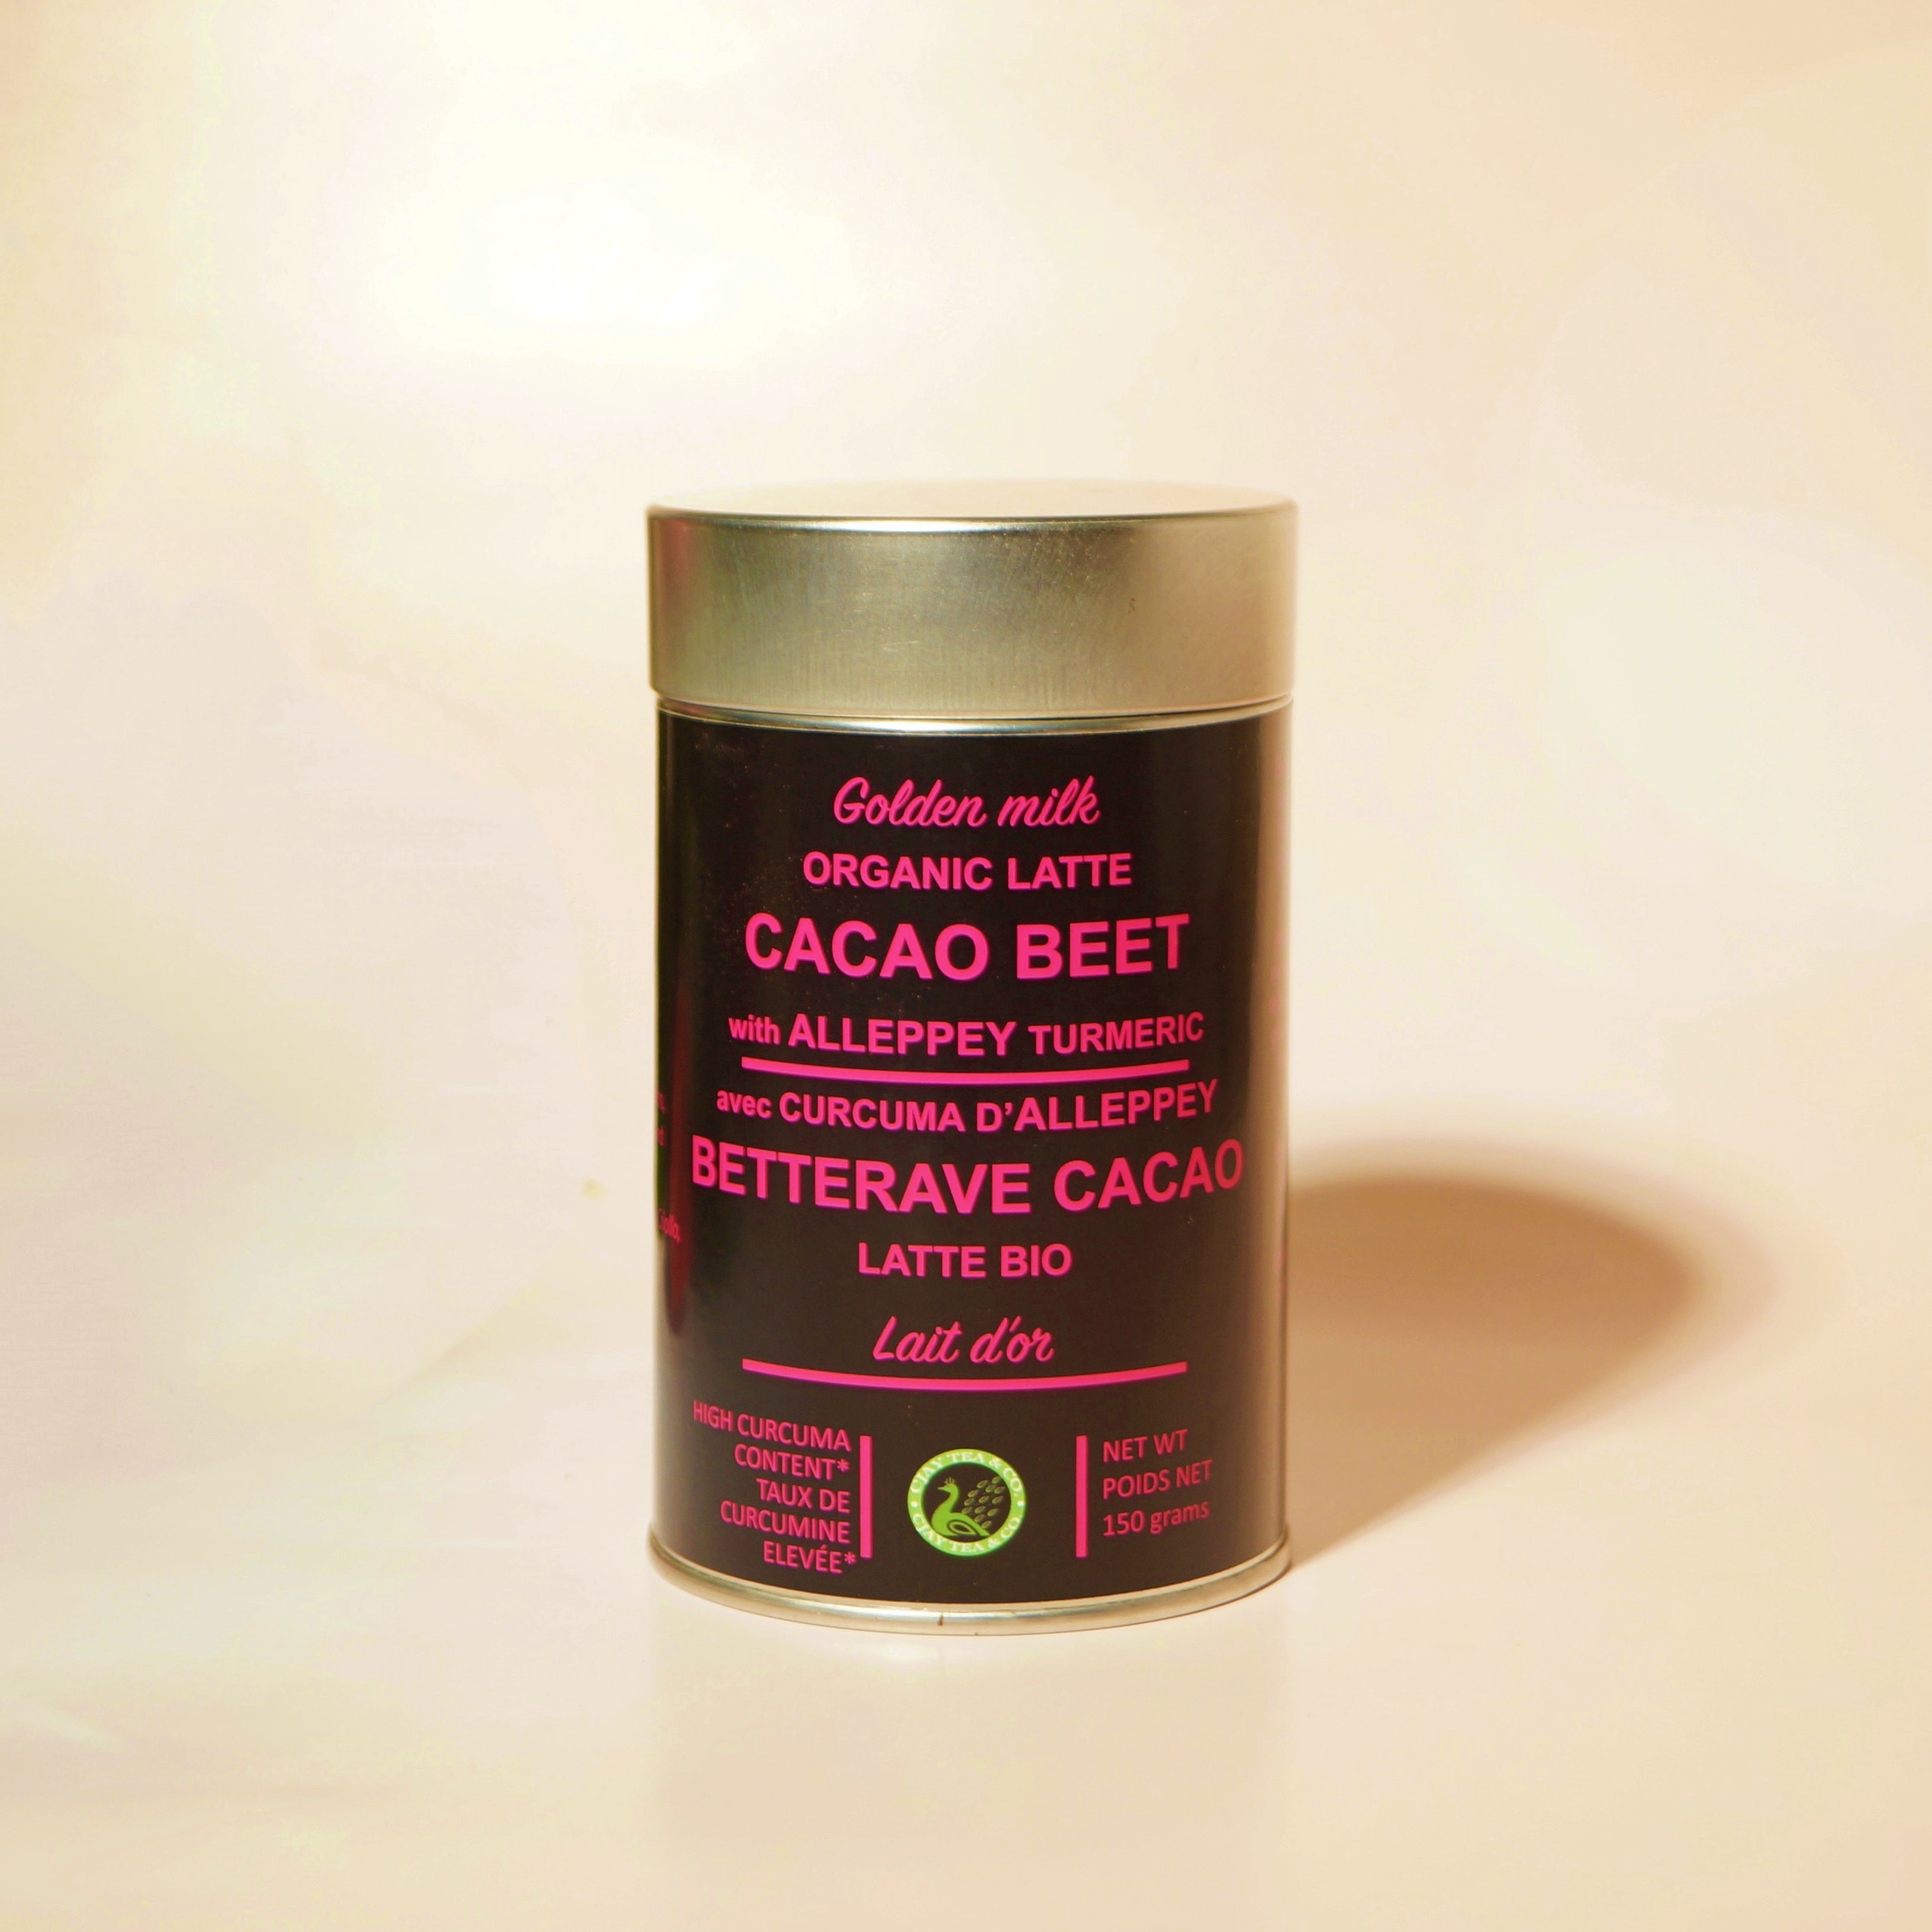 Organic Cacao Beet Latte